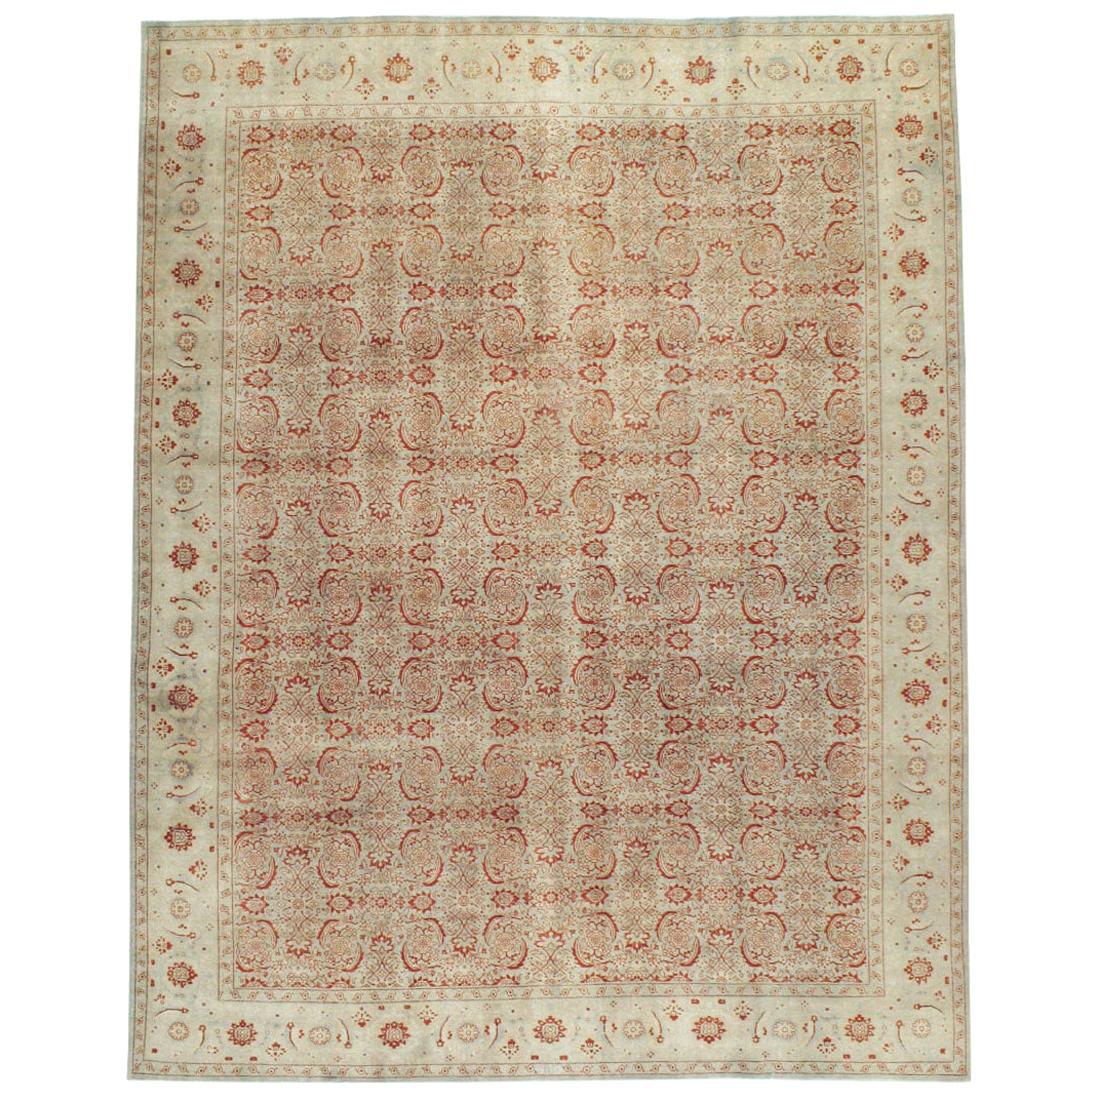 Early 20th Century Handmade Persian Tabriz Room Size Carpet